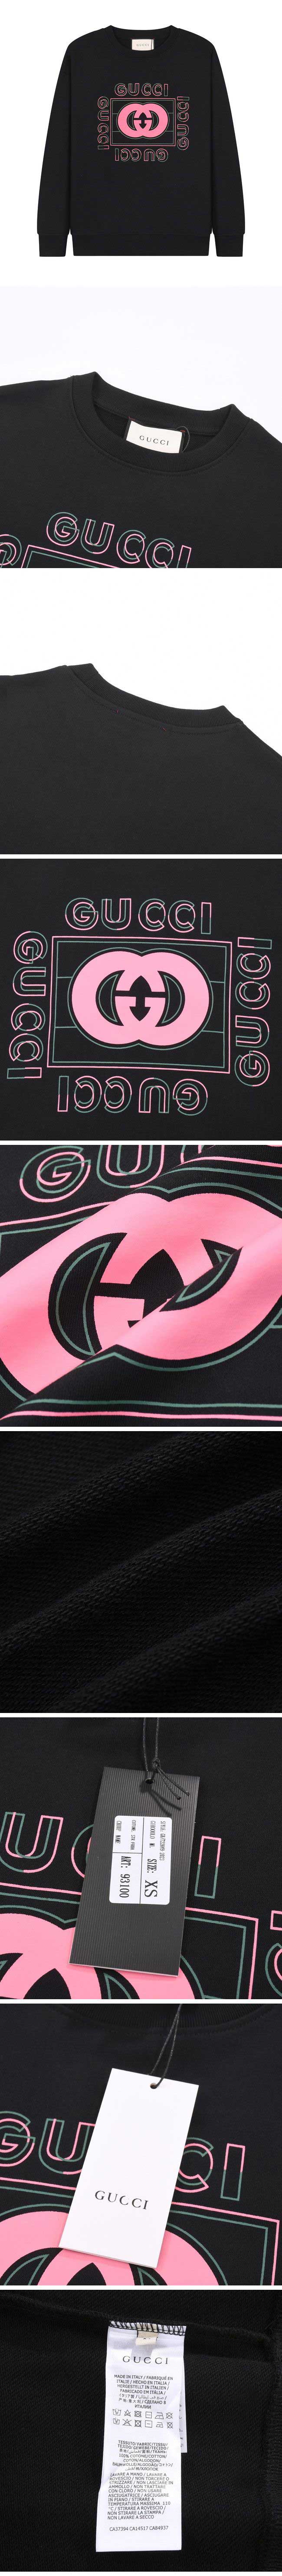 Gucci Center Pink Logo Print Sweat グッチ センター ピンク ロゴ プリント スウェット ブラック